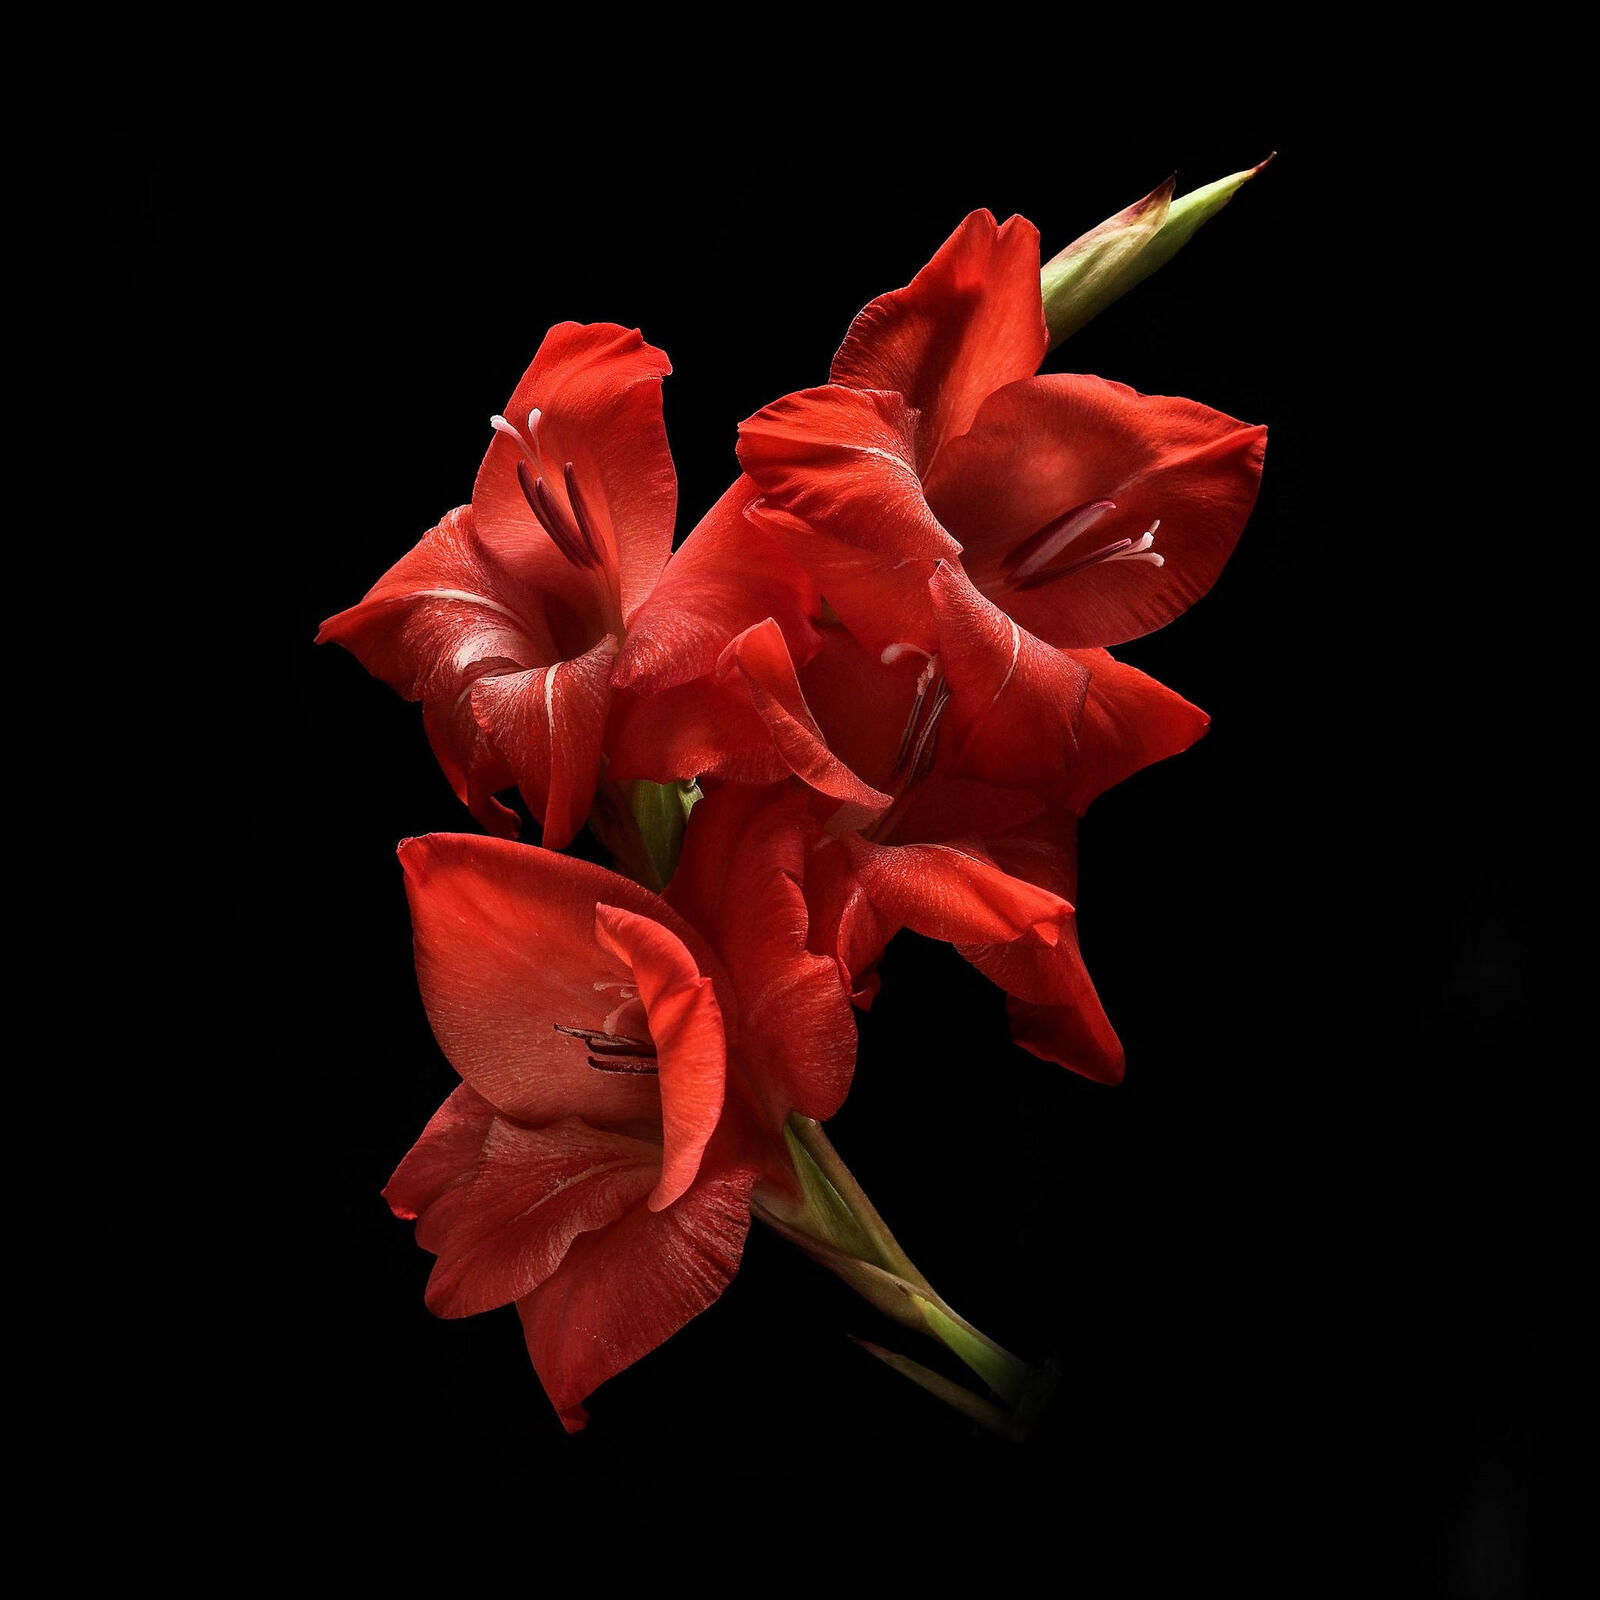 Wallpapers Gladiolus cvetok flora on the desktop